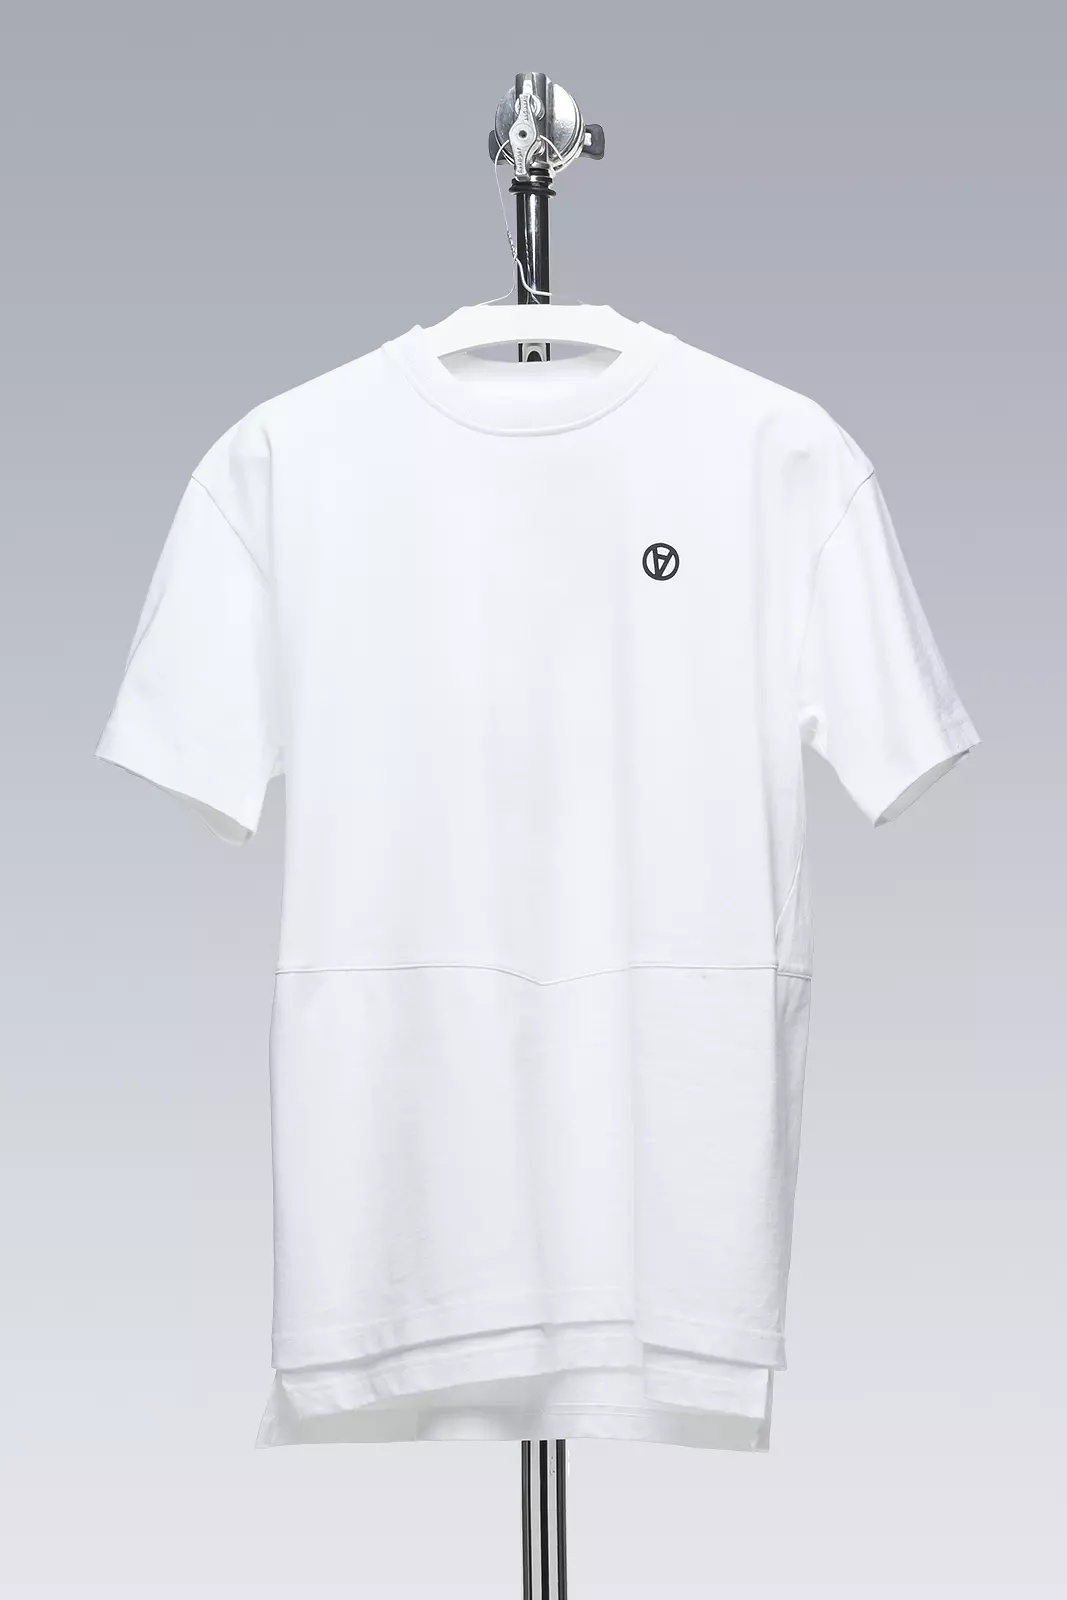 S28-PR-B 100% Organic Cotton Short Sleeve T-shirt White - 1